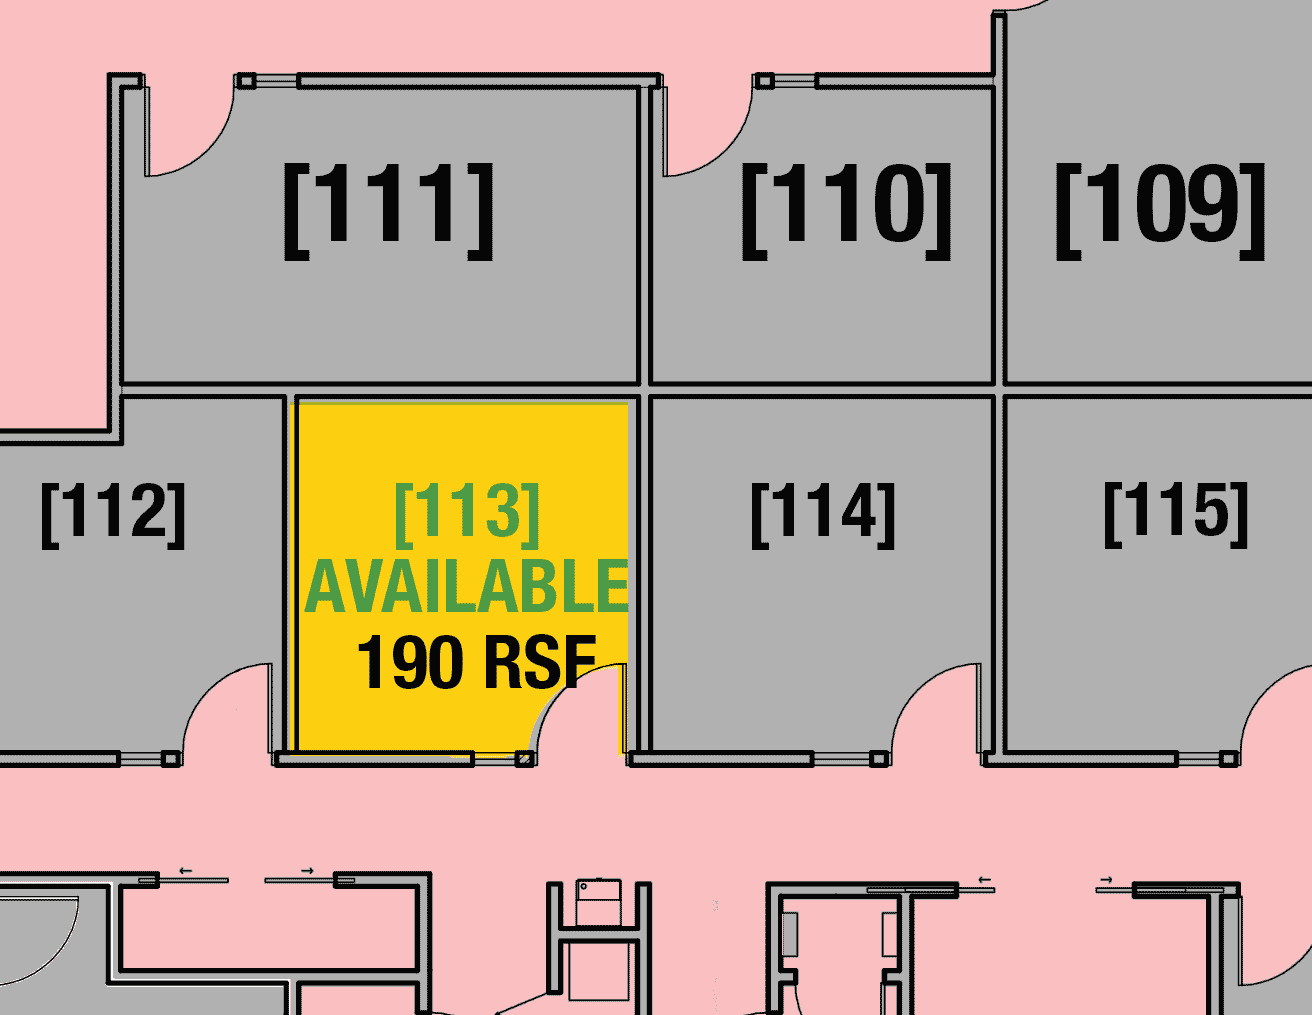 SUITE 208- 413 RSF